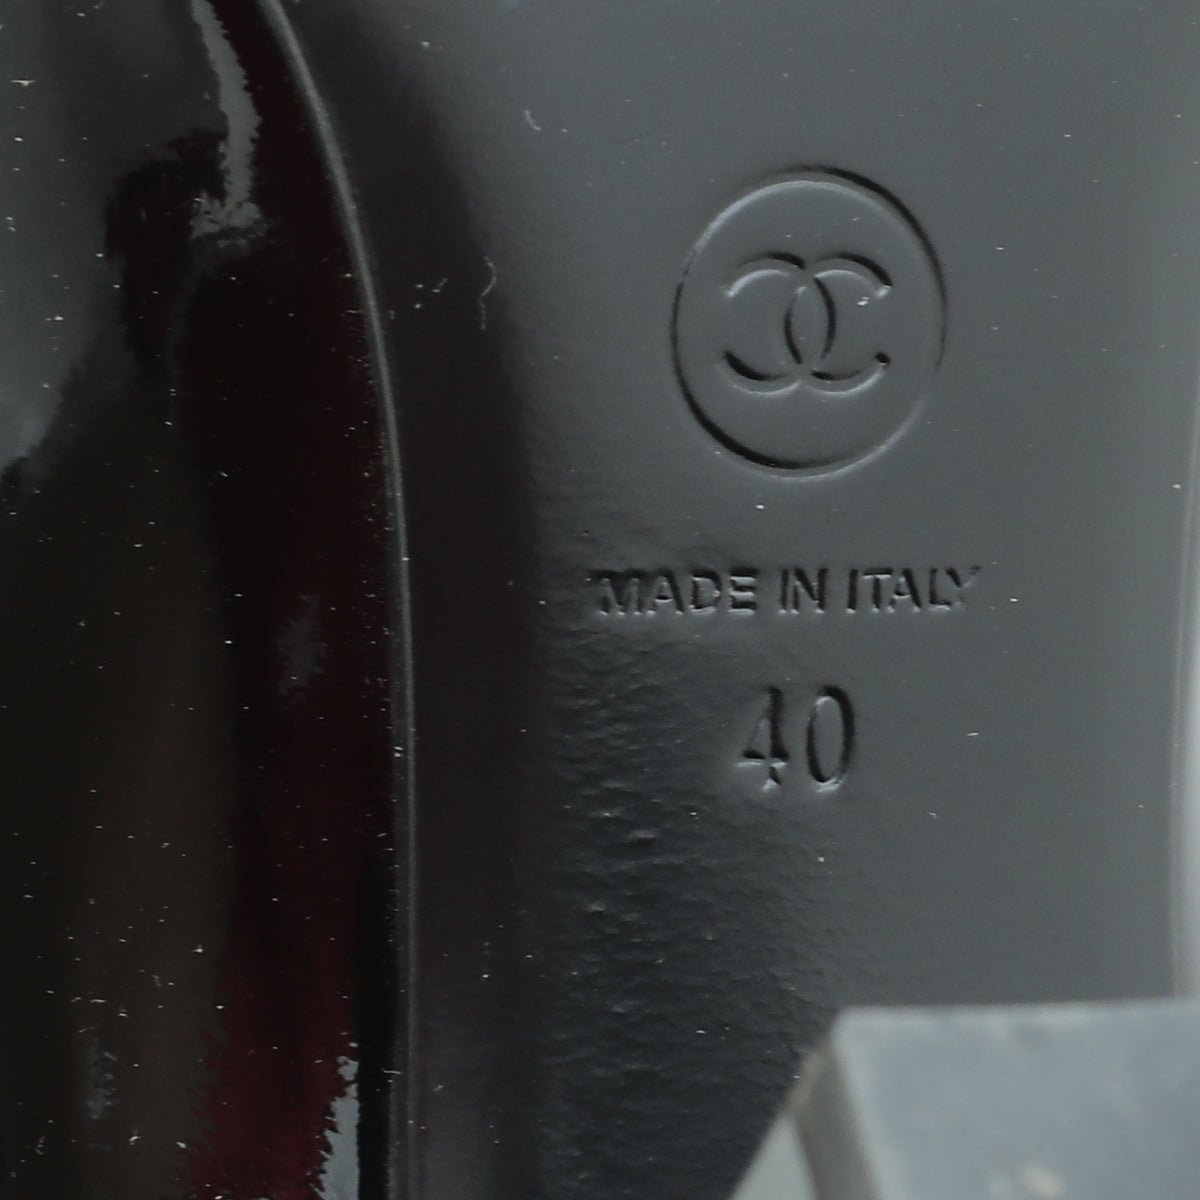 Chanel - Chanel Black CC Chain Loafer Pump 40 | The Closet